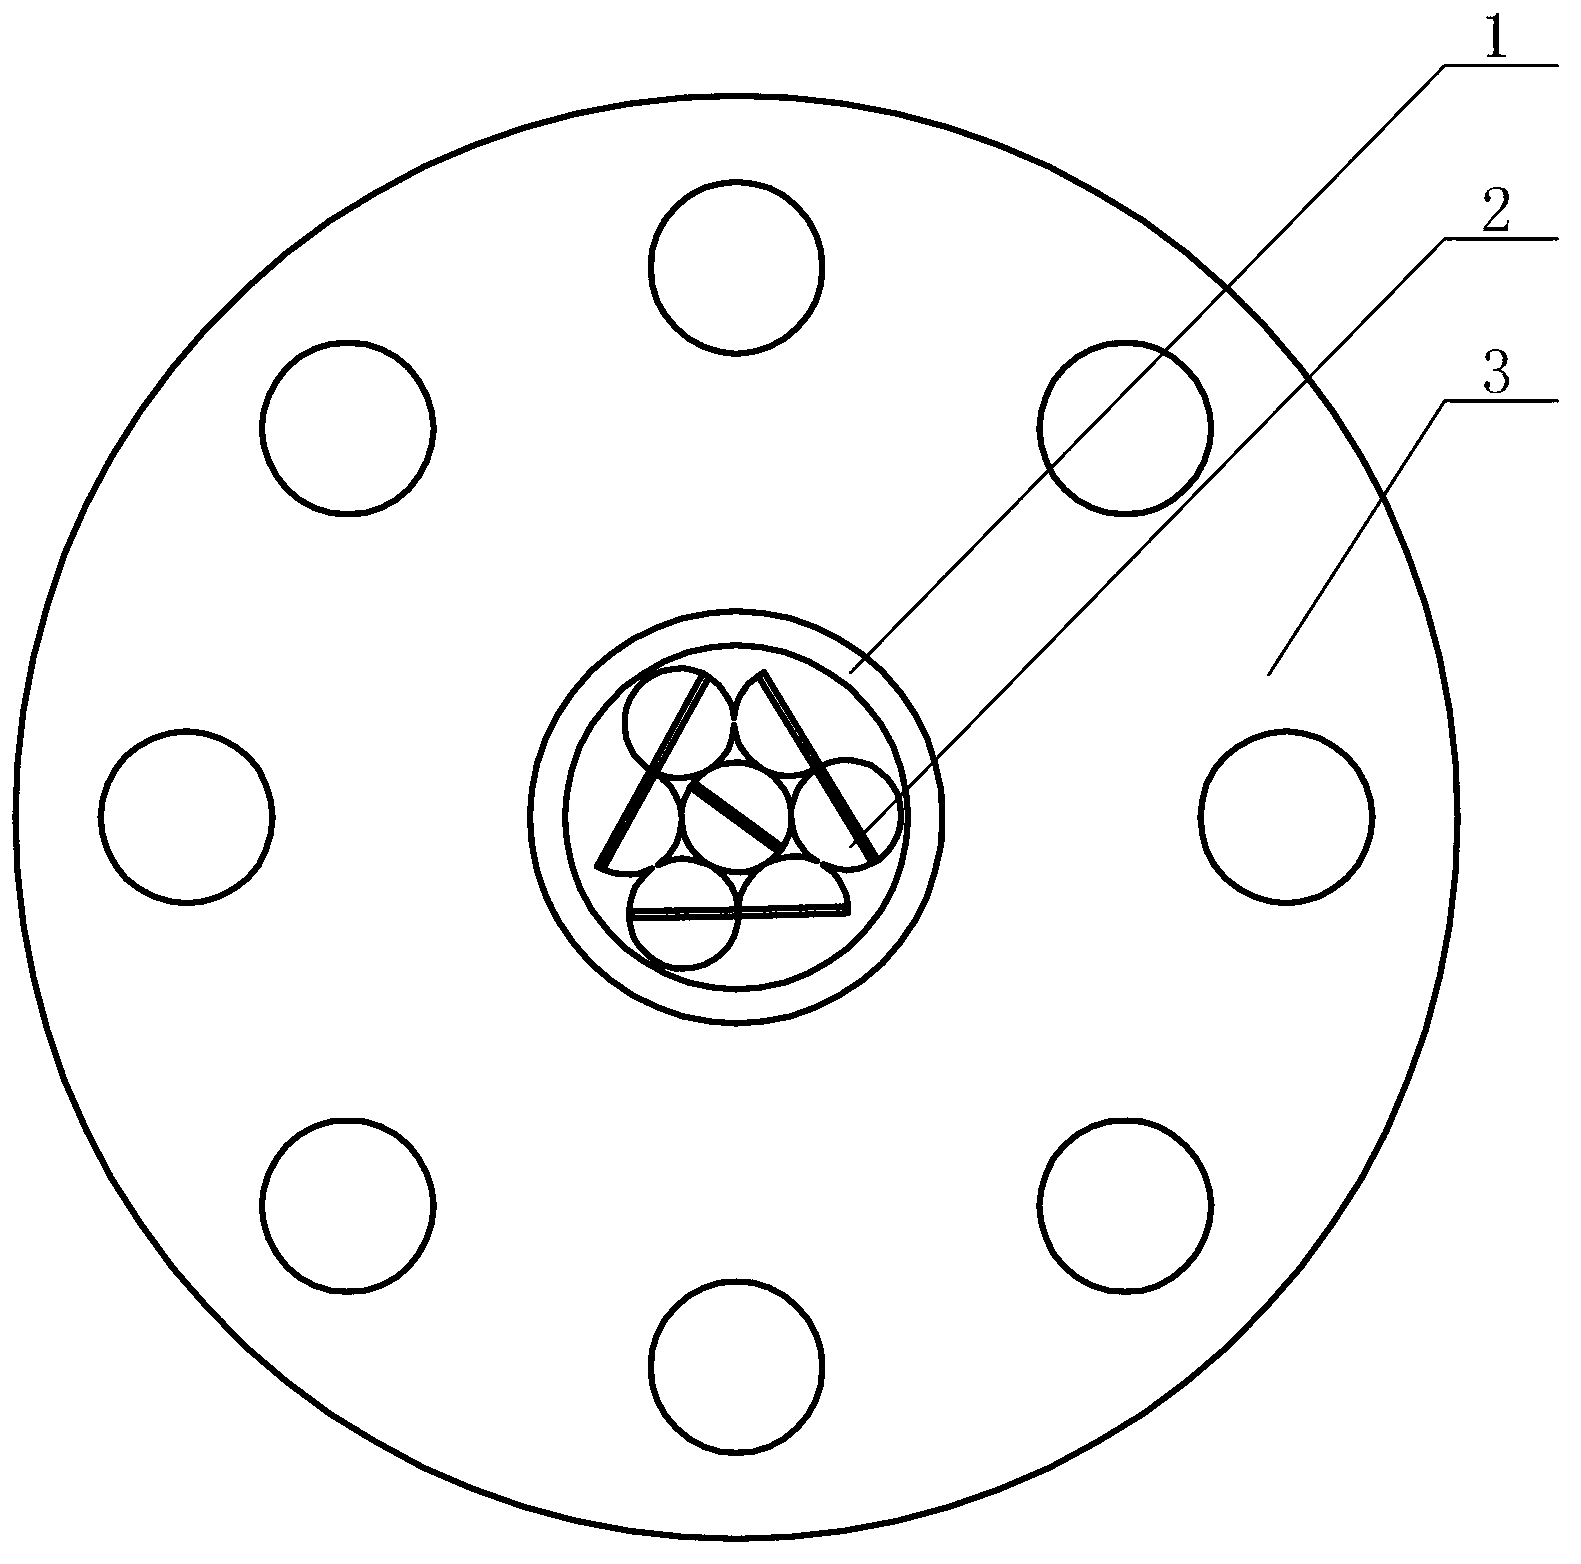 Spiral low-shear static mixer